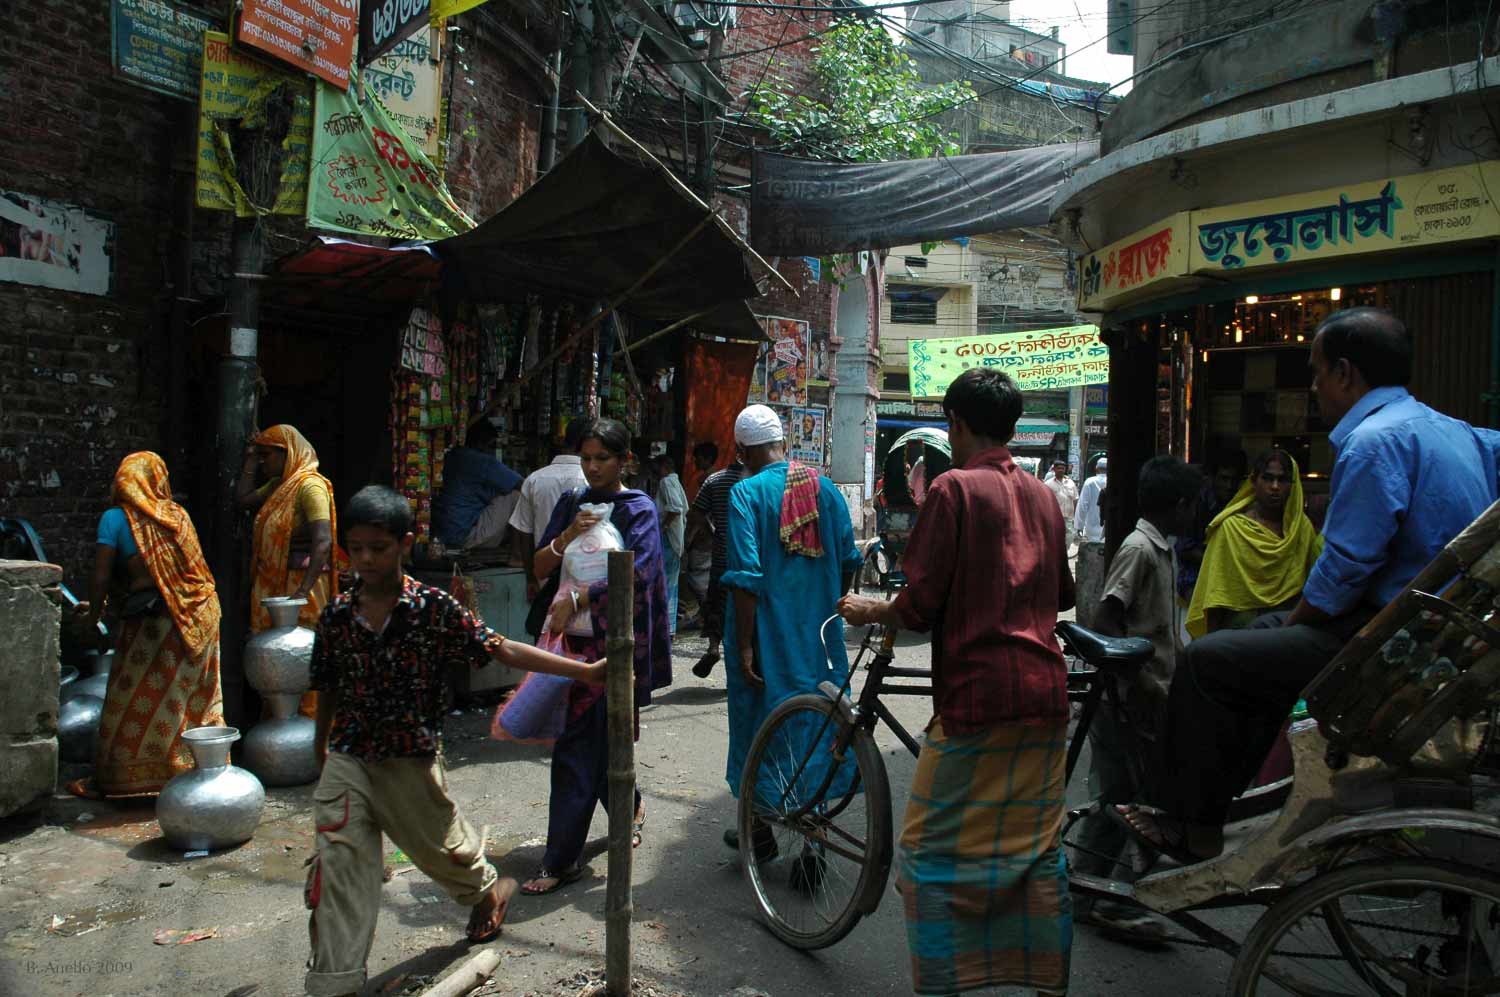 A public water tap on Hindu Street in Old Dhaka